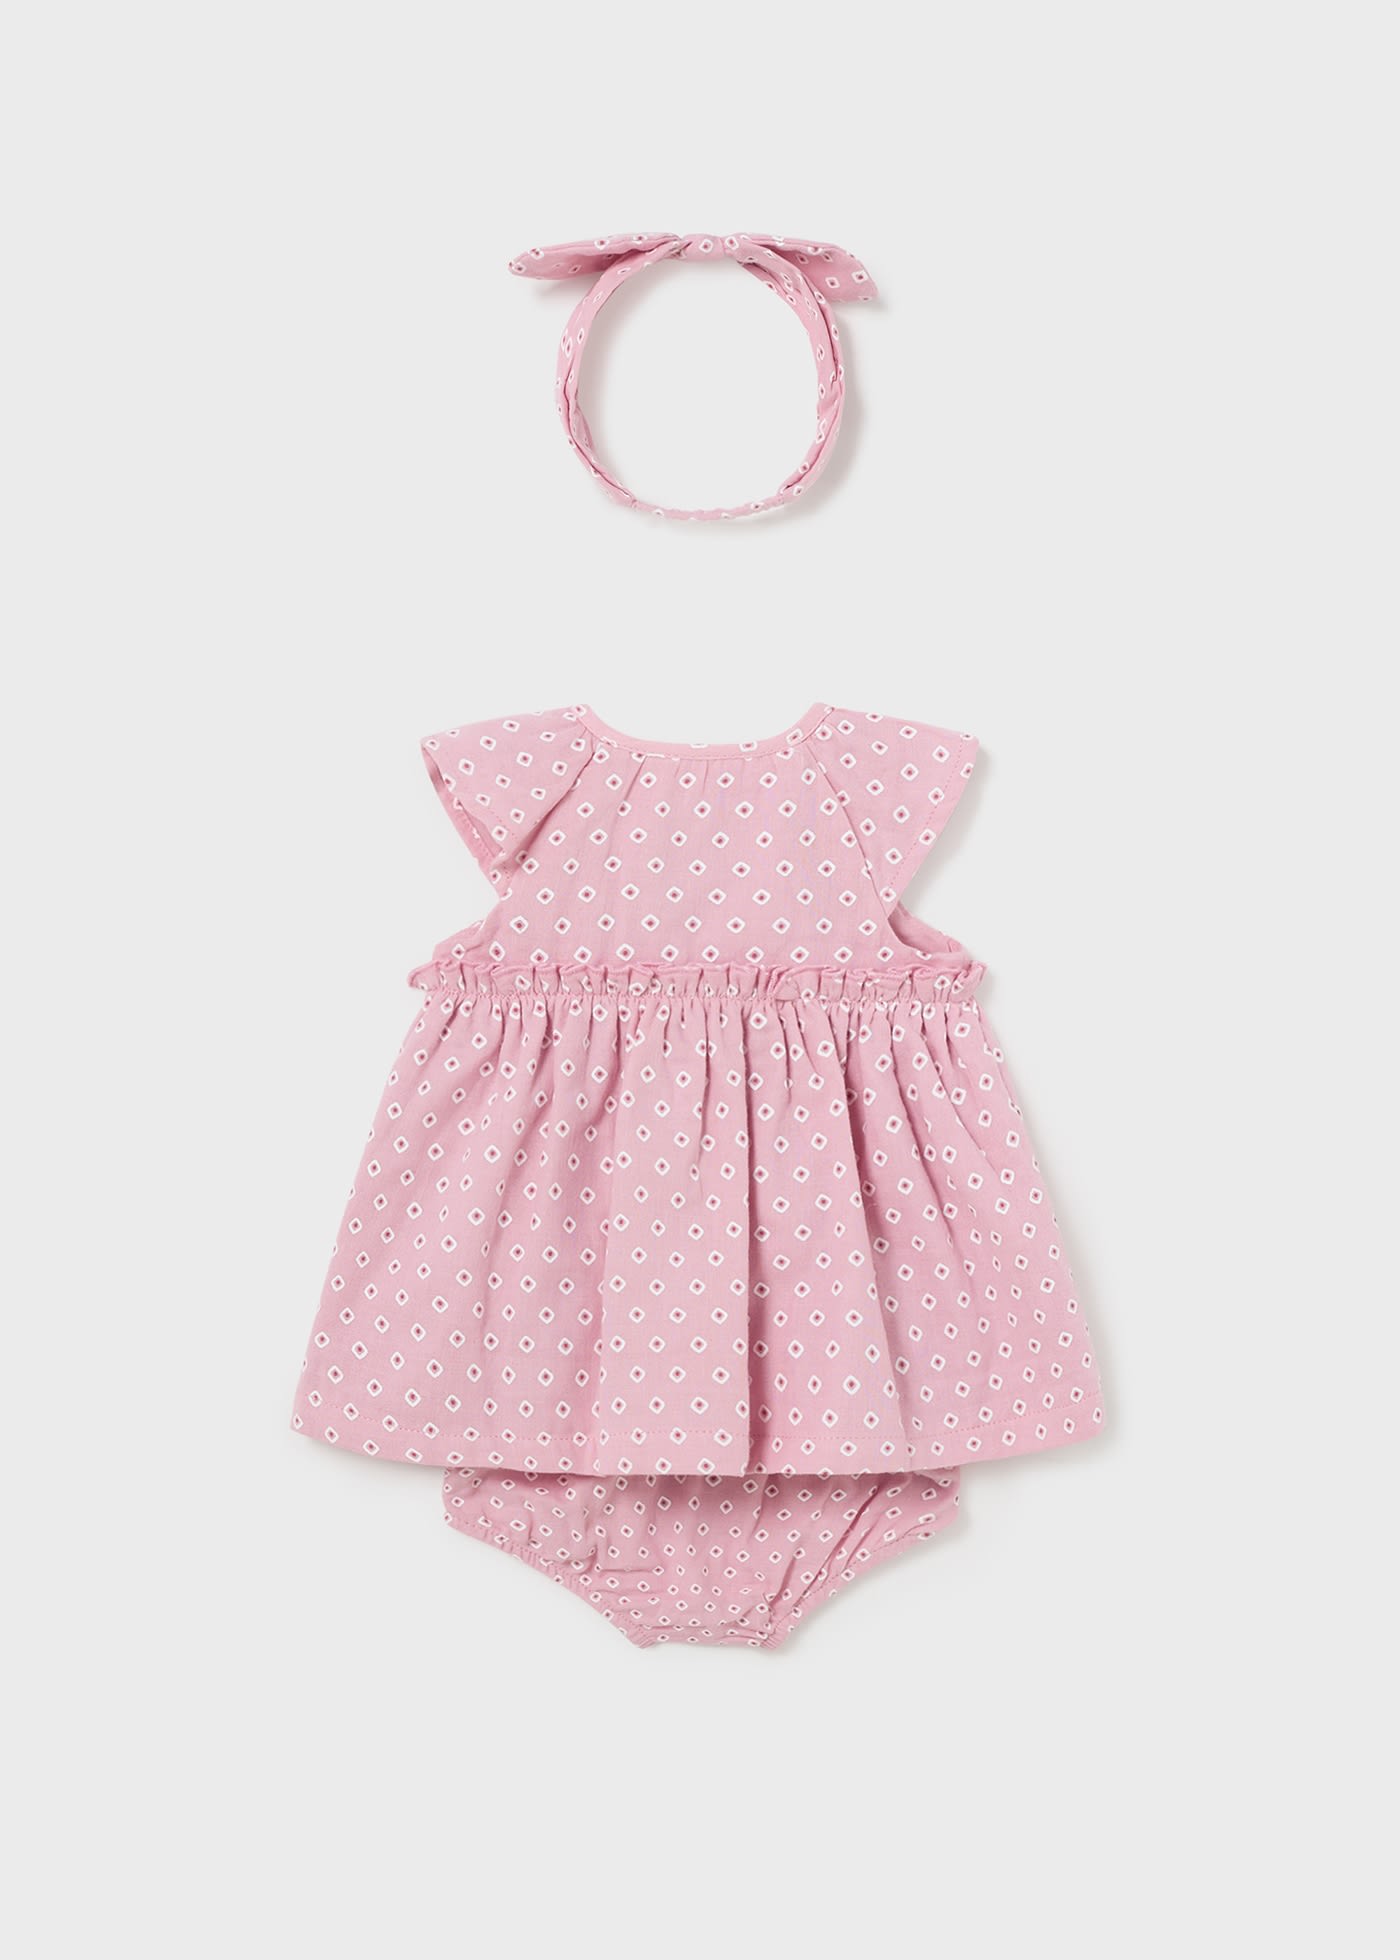 eTukuri - Products | Newborn Baby girl dress set